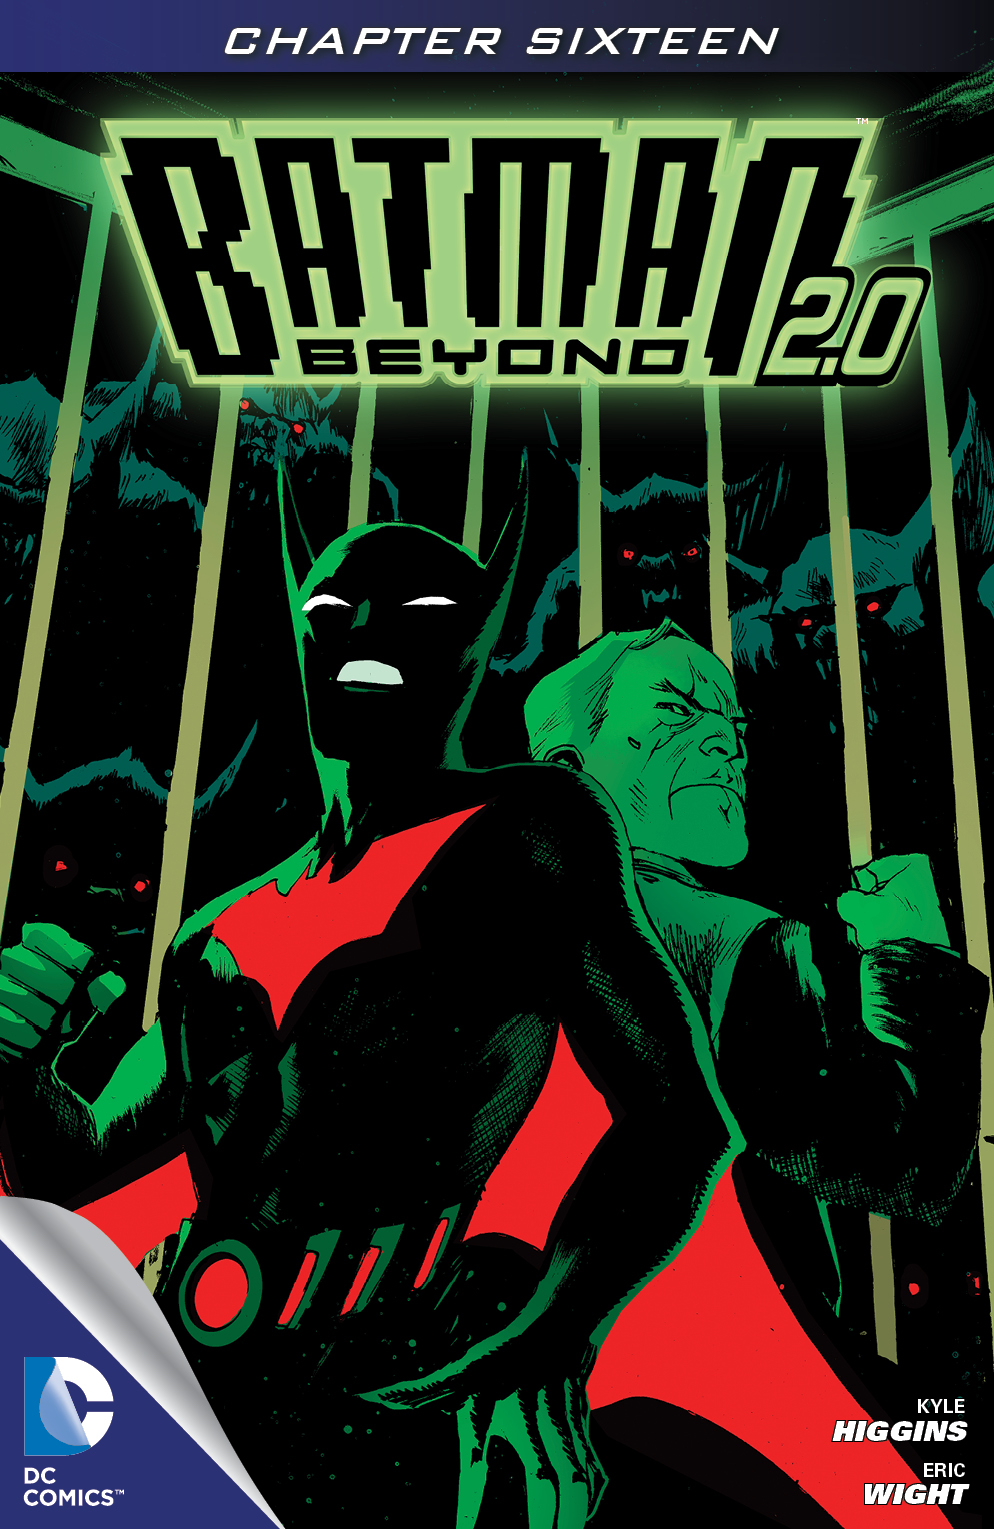 Batman Beyond 2.0 #16 preview images